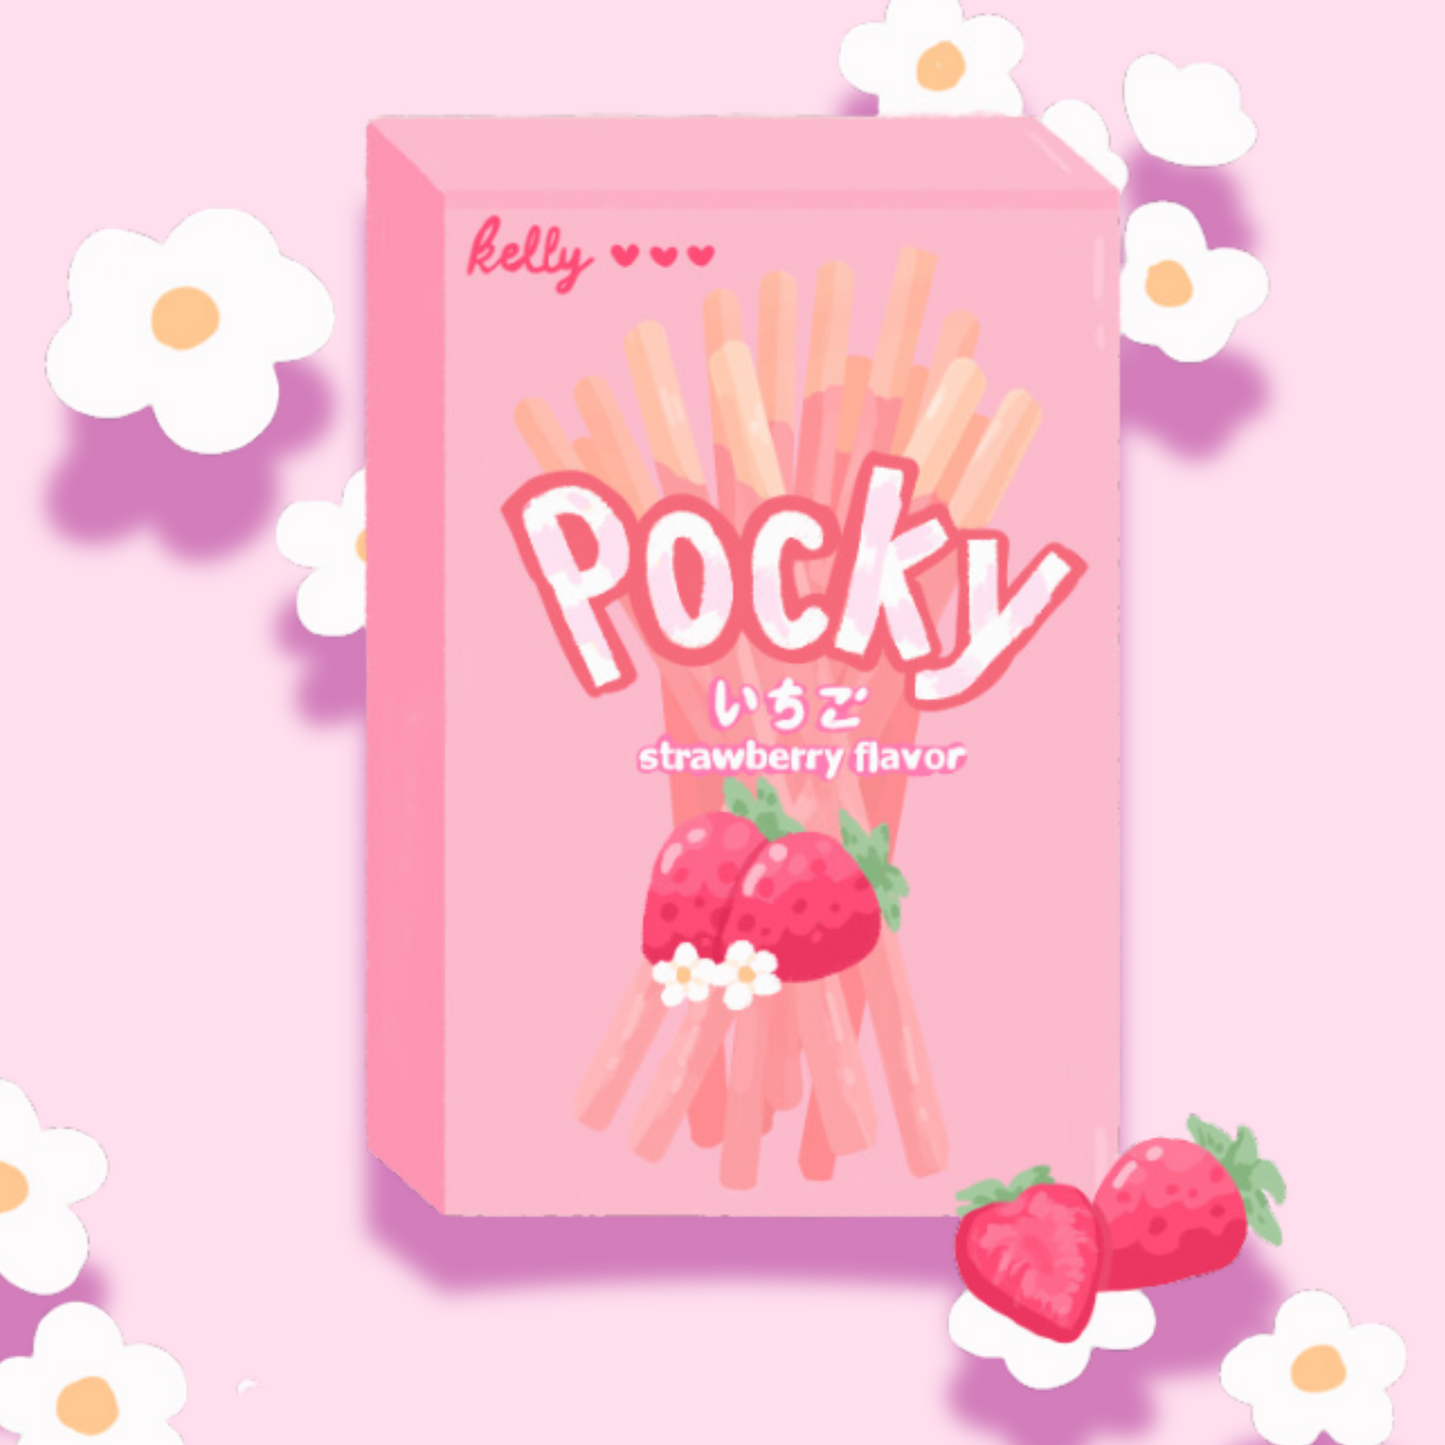 Pocky regular size strawberry